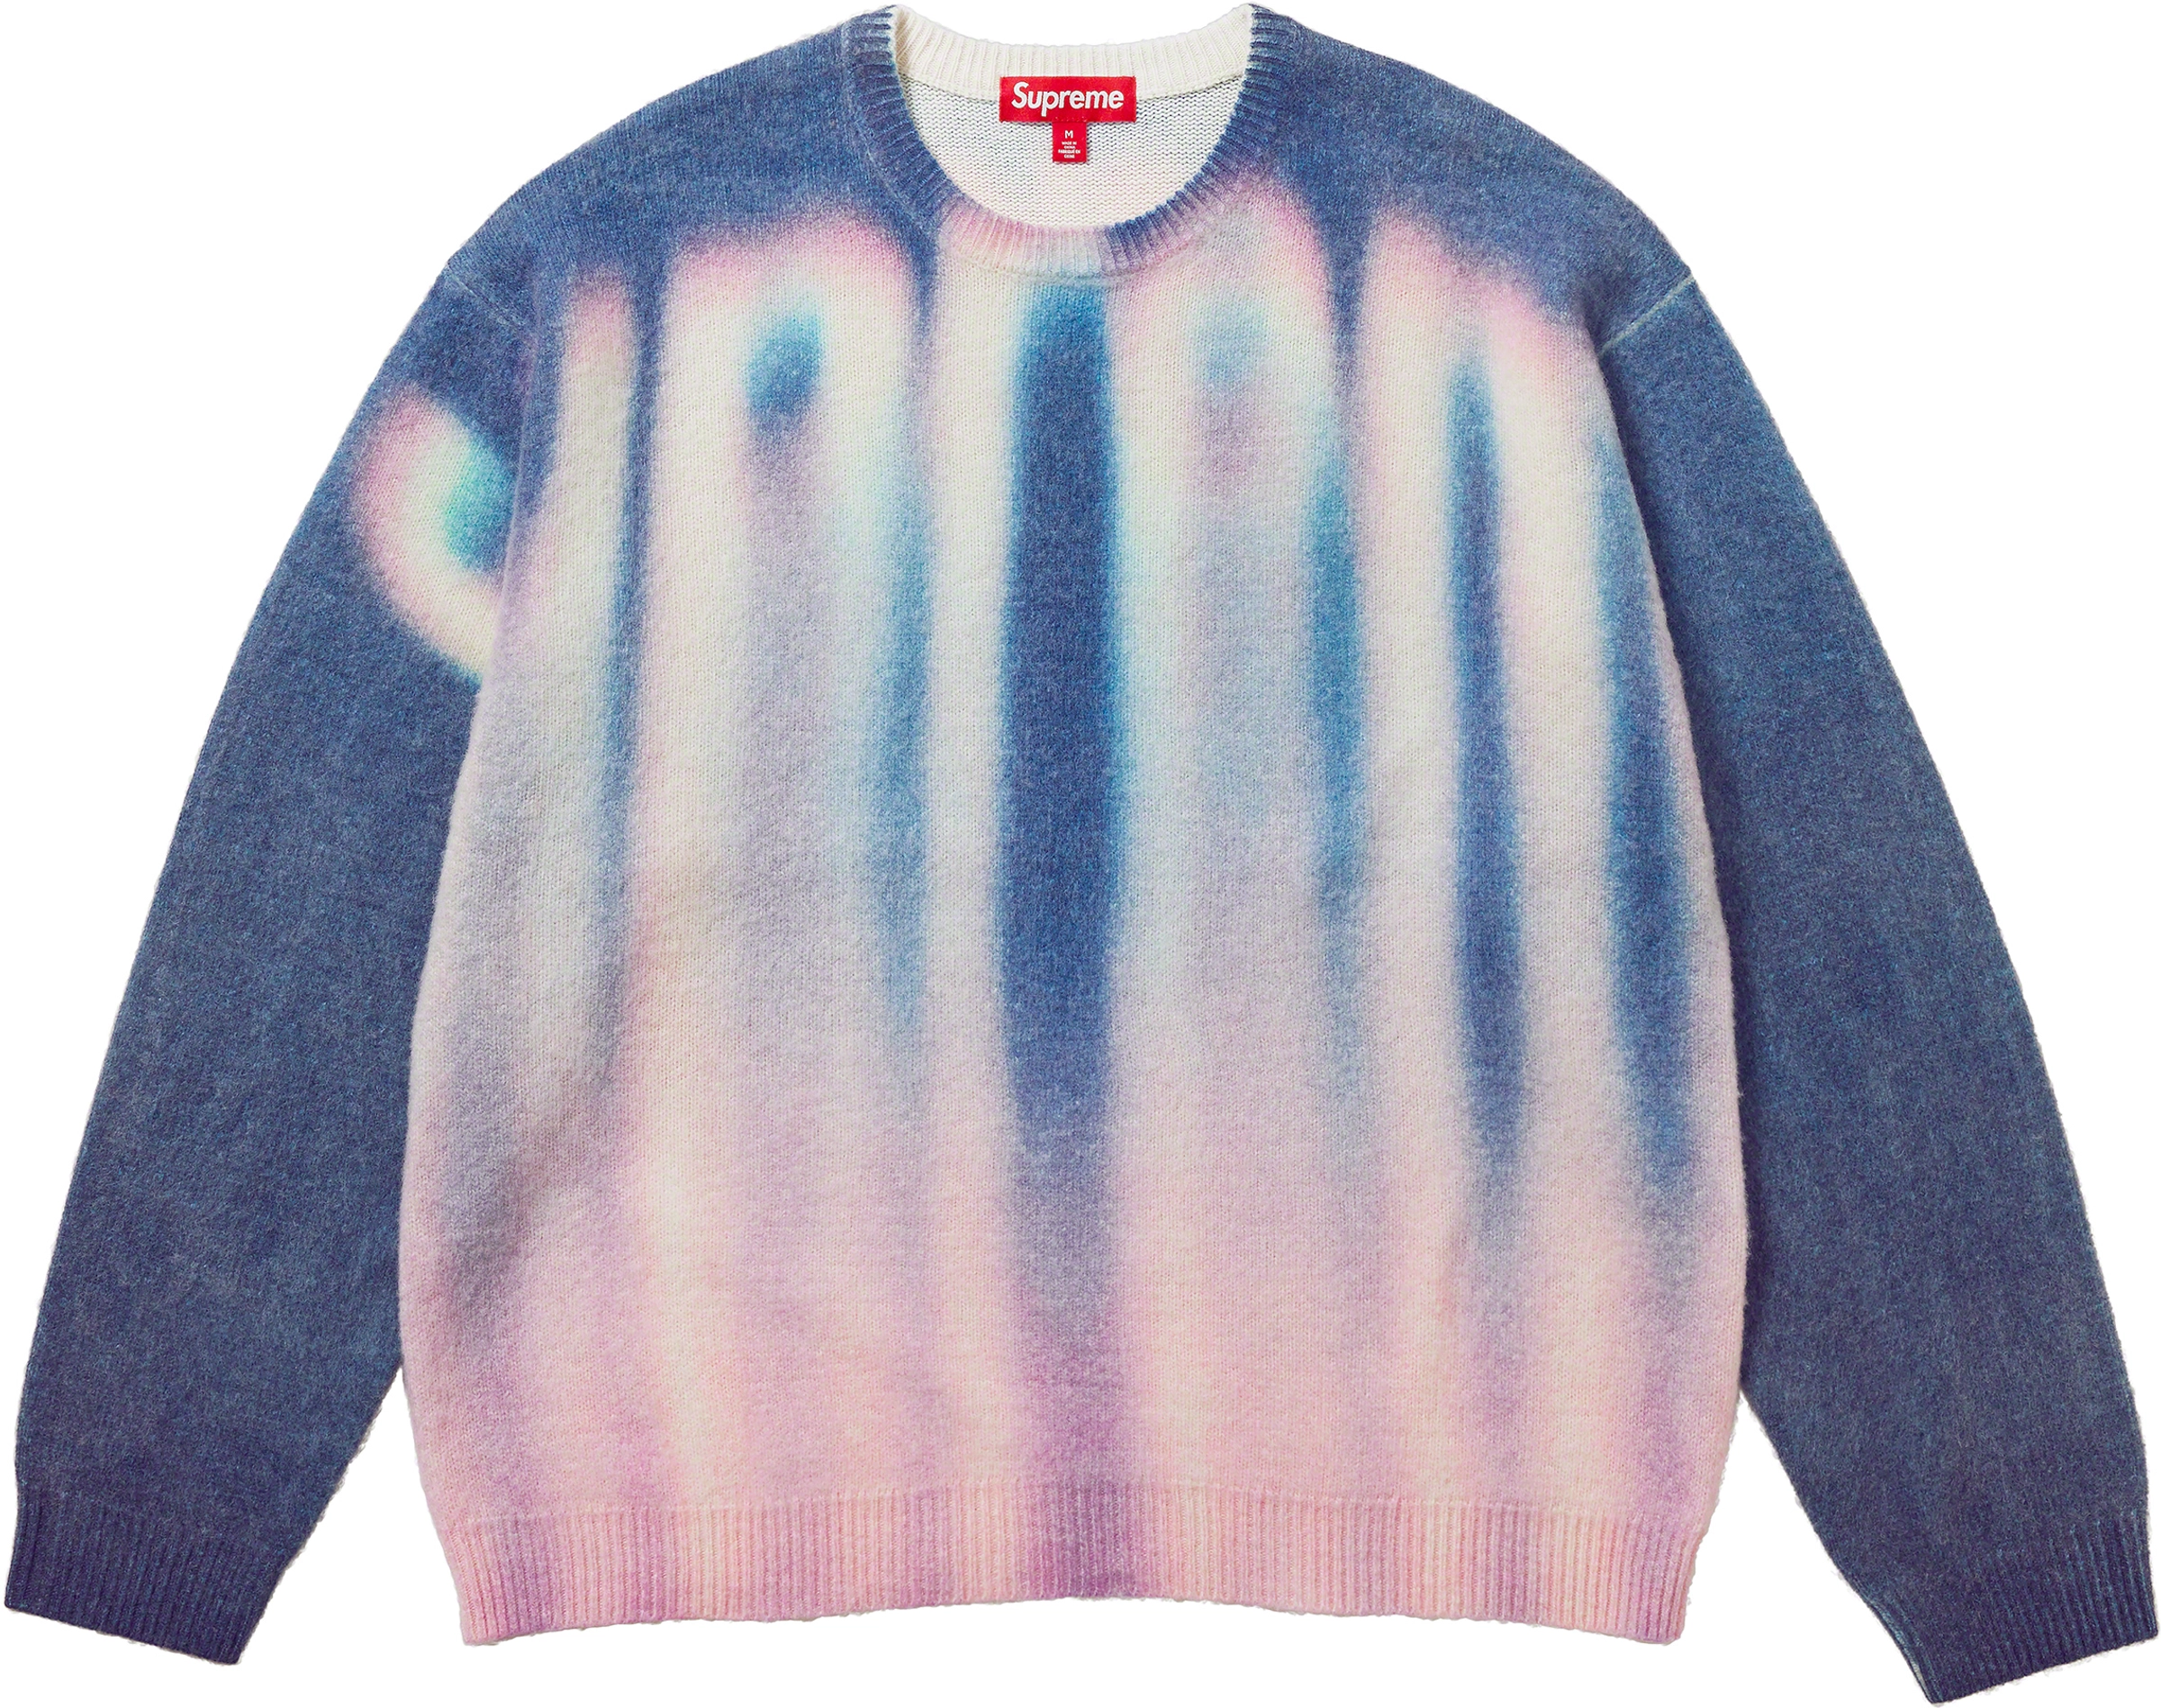 Supreme Blurred Logo Sweater